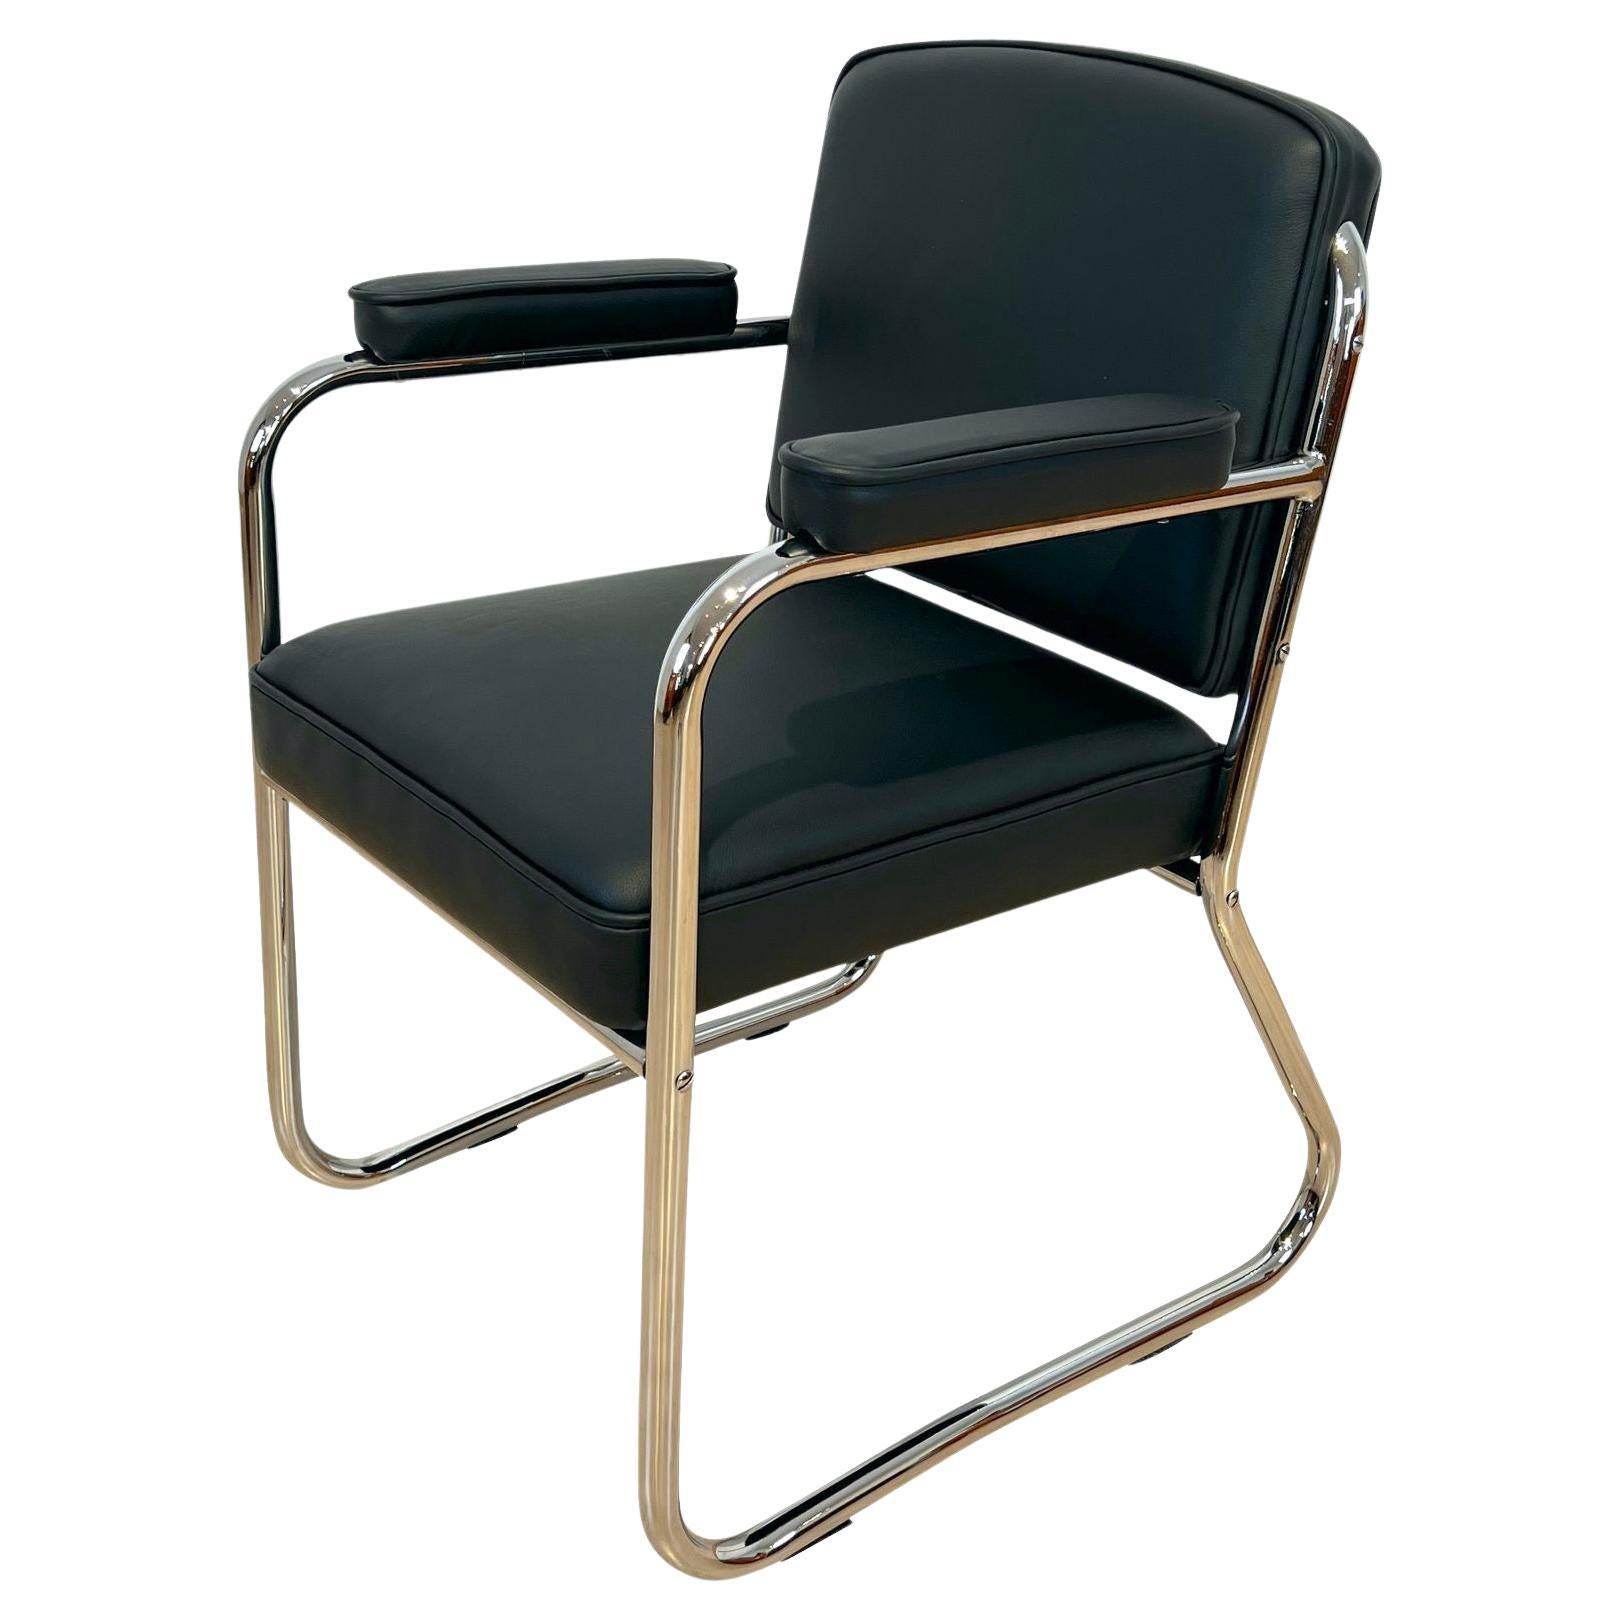 Bauhaus-Sessel, verchromte Stahlrohre, Leder, Deutschland um 1930